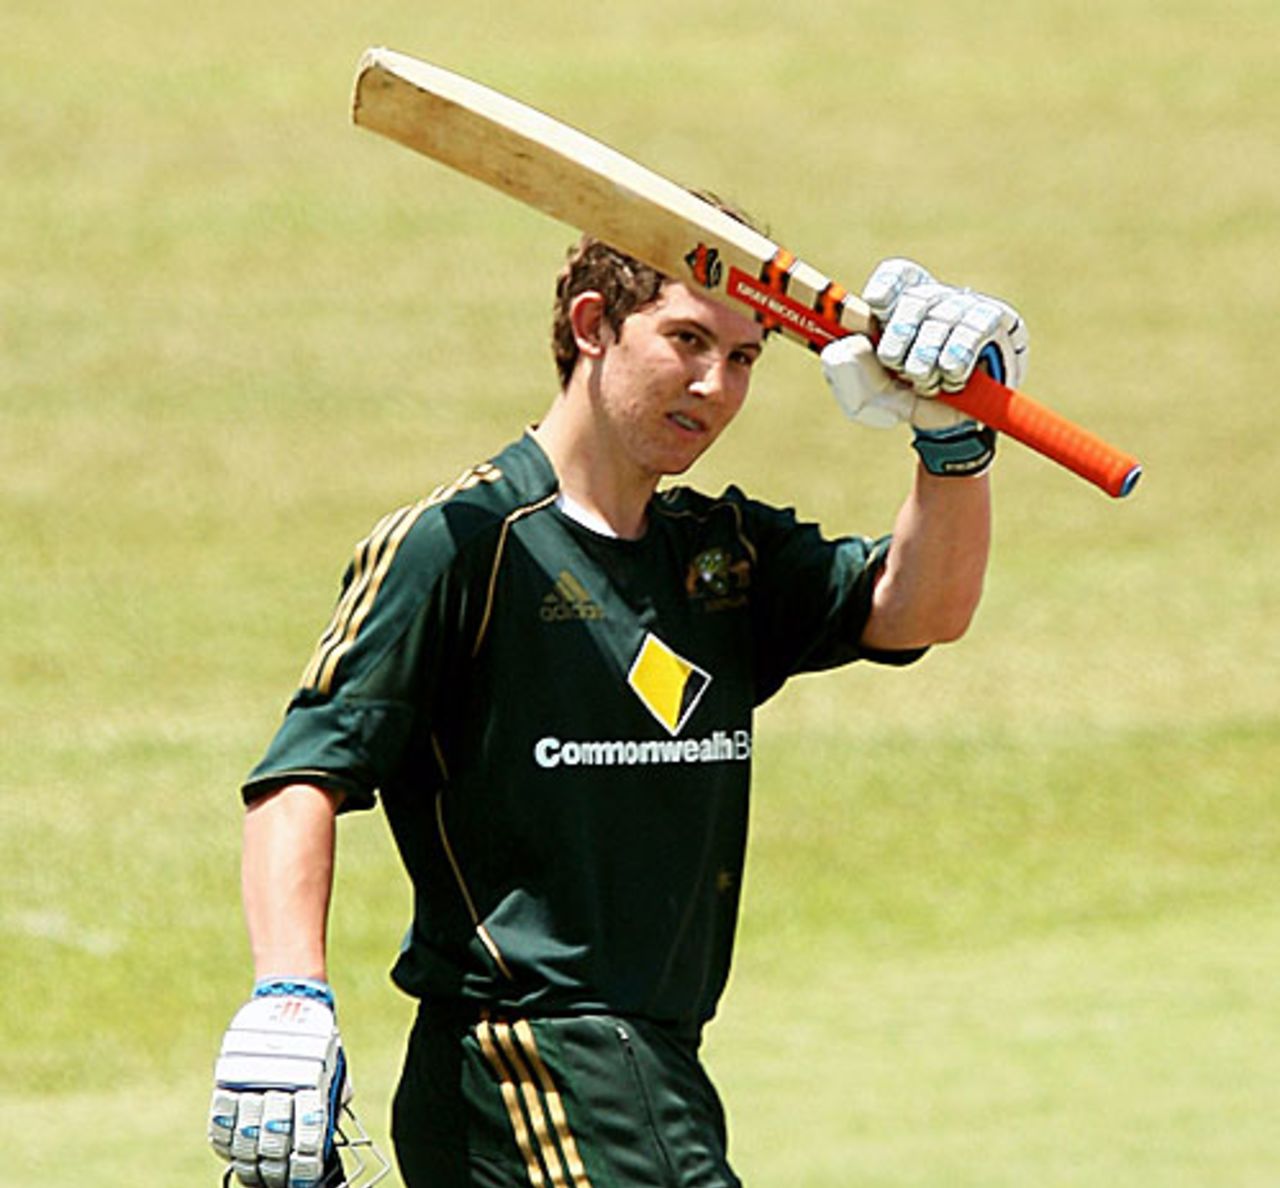 Nic Maddinson celebrates after reaching his ton, Australia Under-19s v Sri Lanka Under-19s, 2nd ODI, Darwin, October 4, 2009